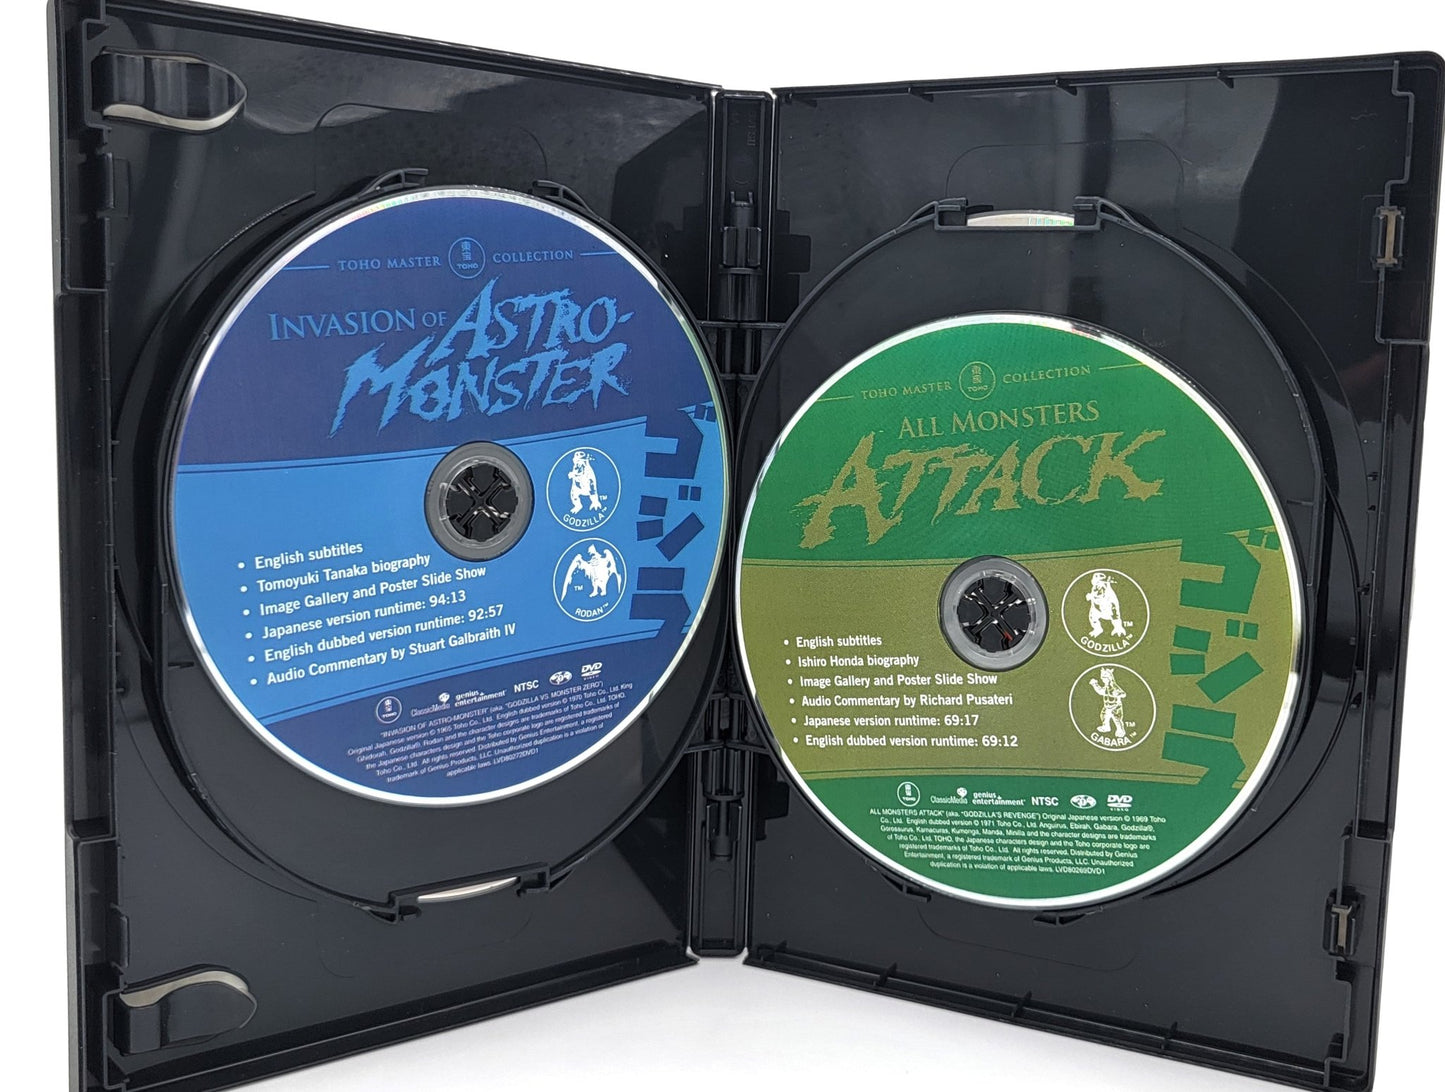 Classic Media - The Godzilla Collection Volume 1 & Volume 2 - 2011 | DVD | 8 Disc Set - Includes the Original Uncut Godzilla - DVD - Steady Bunny Shop